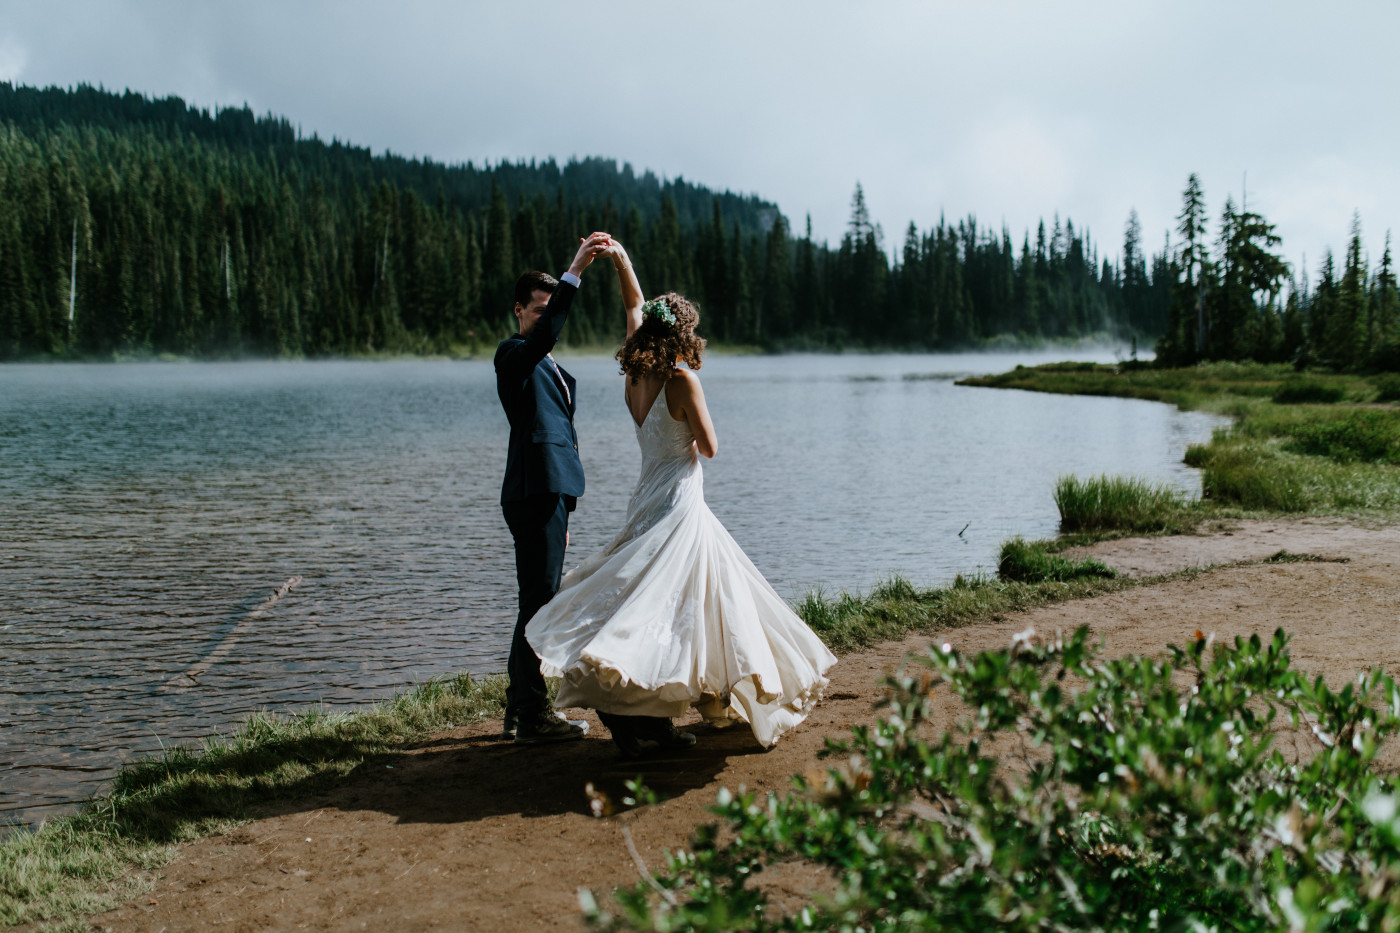 Tasha and Chad dance. Elopement photography at Mount Rainier by Sienna Plus Josh.